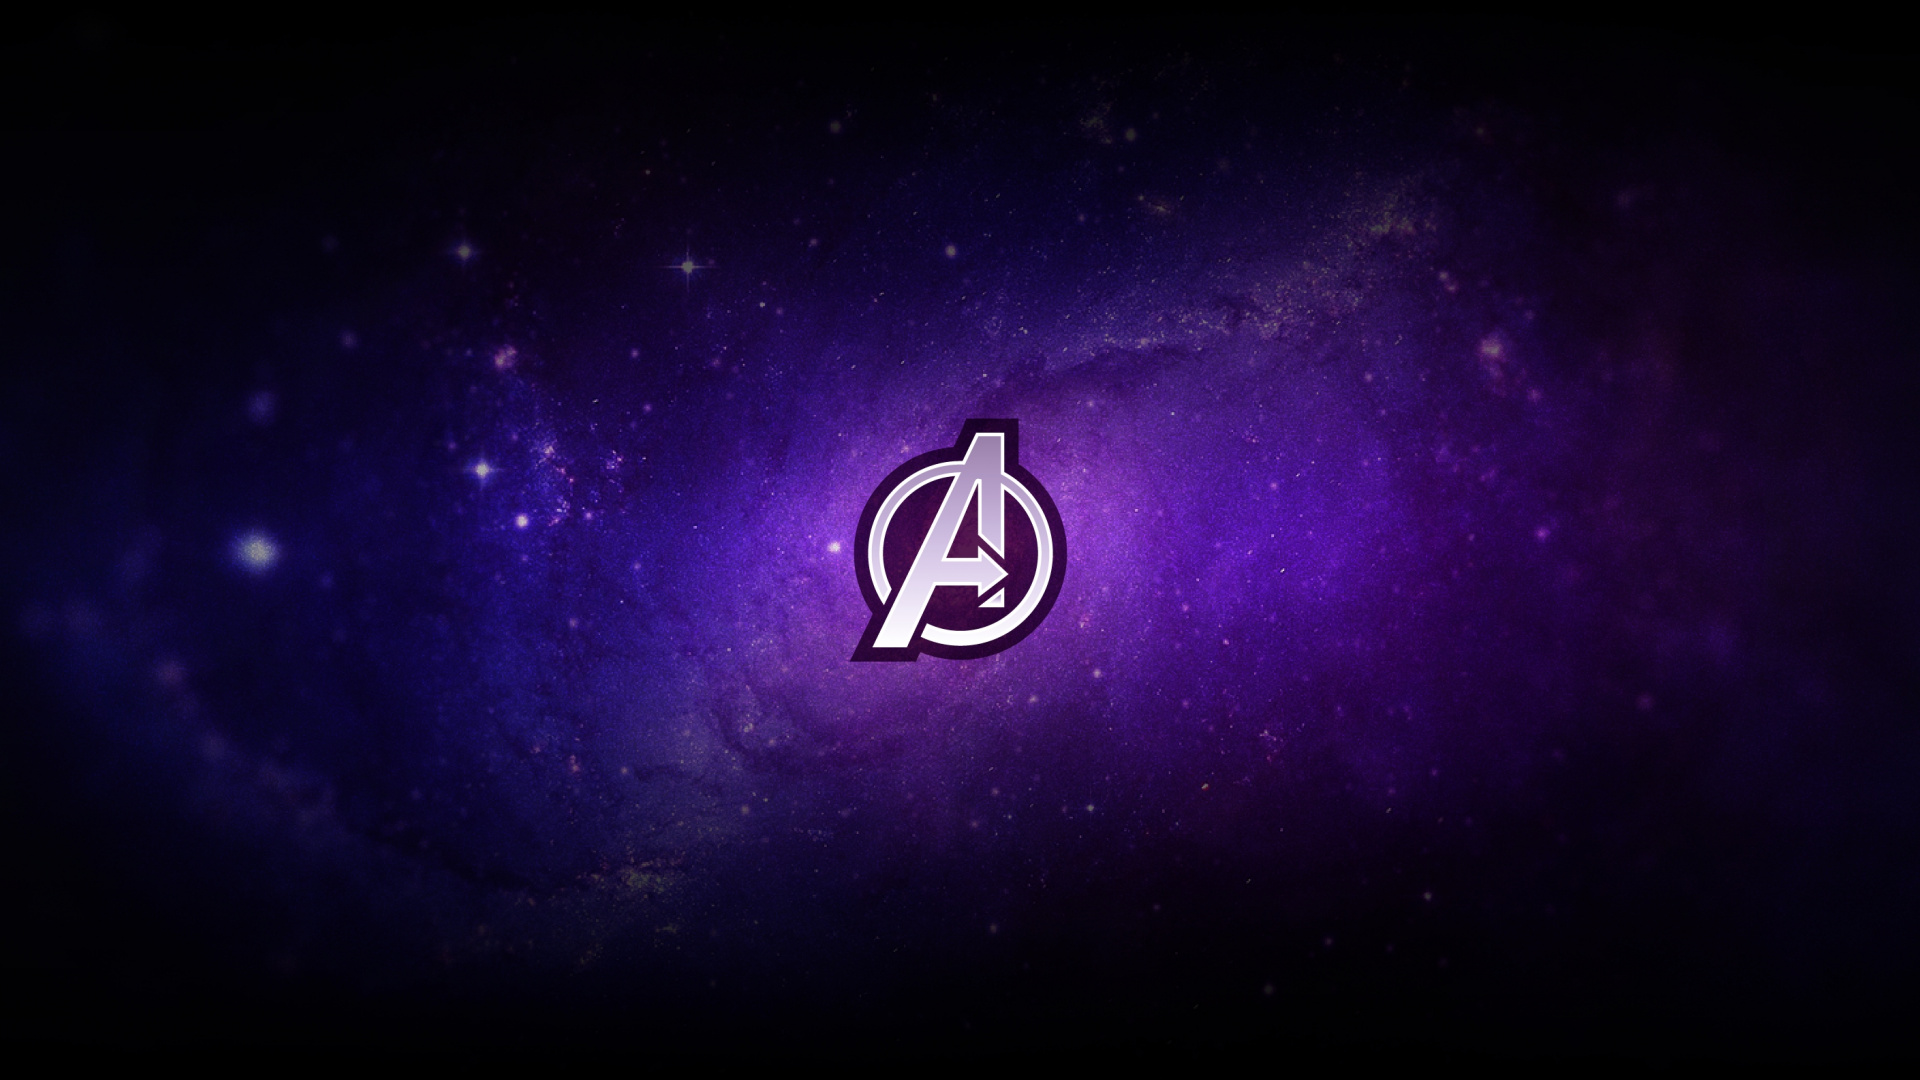 Download Avengers, logo, purple, minimal wallpaper, 1920x Full HD, HDTV, FHD, 1080p